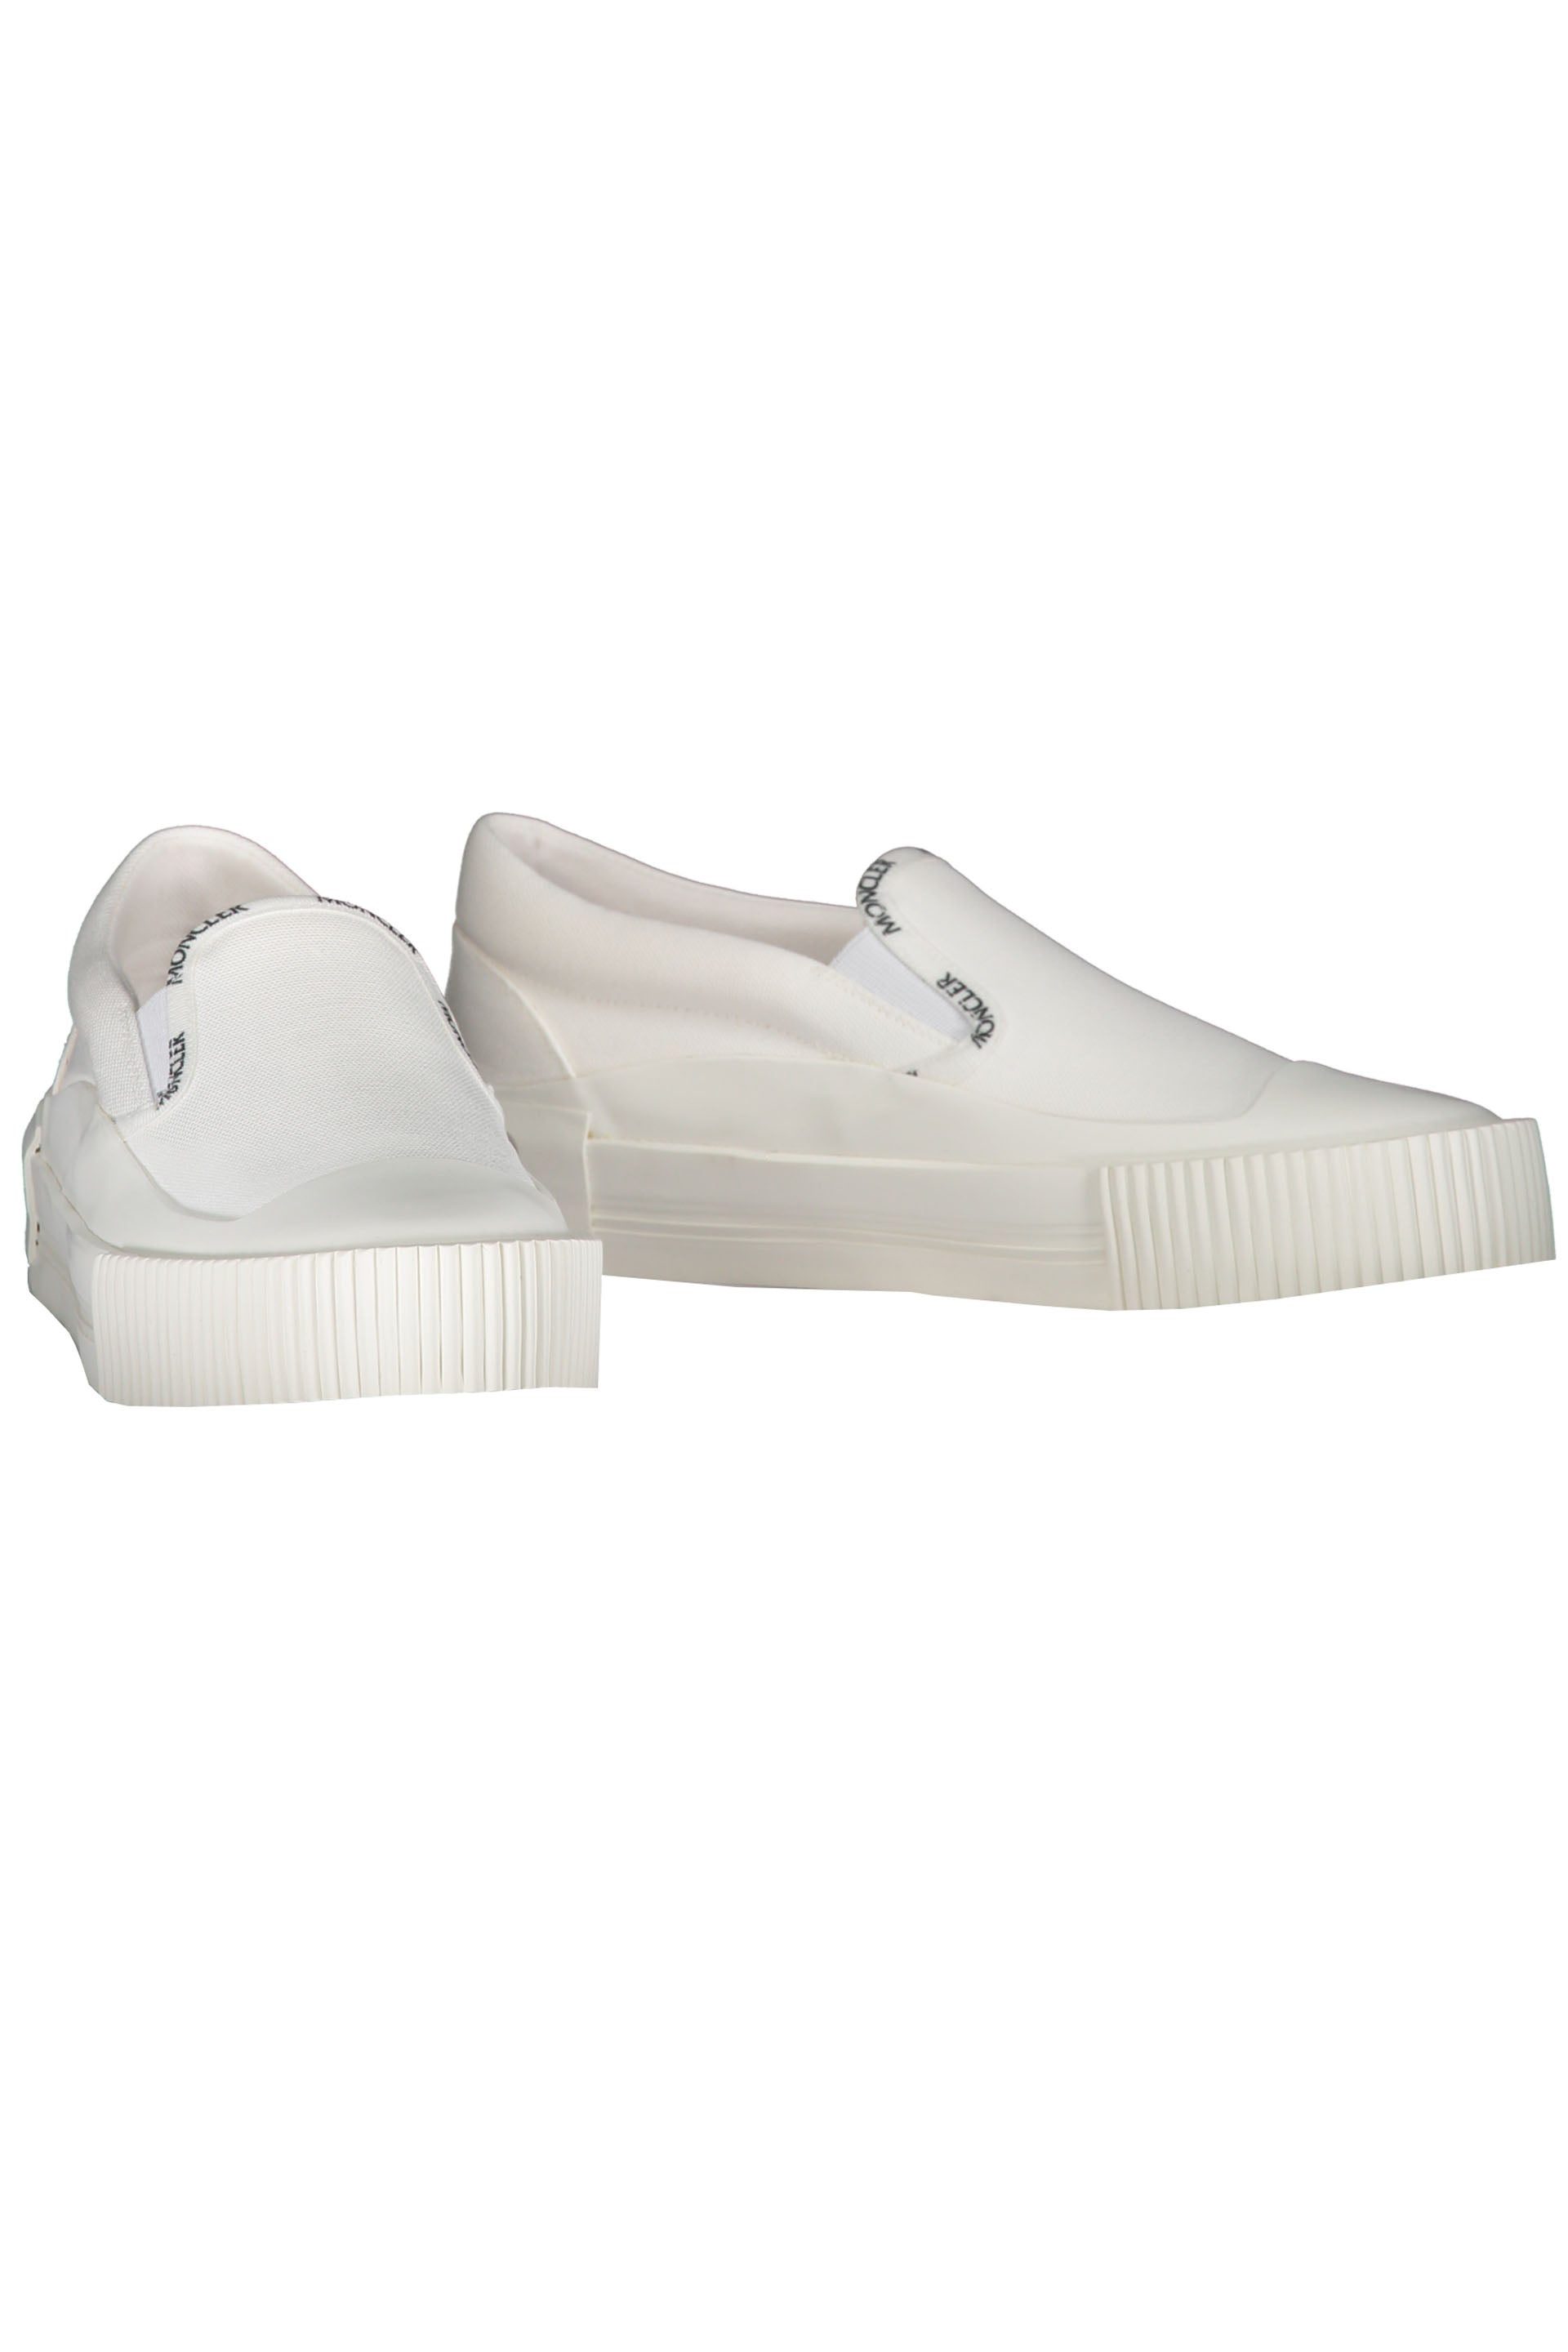 Glissiere Tri slip-on sneakers-Moncler-OUTLET-SALE-ARCHIVIST